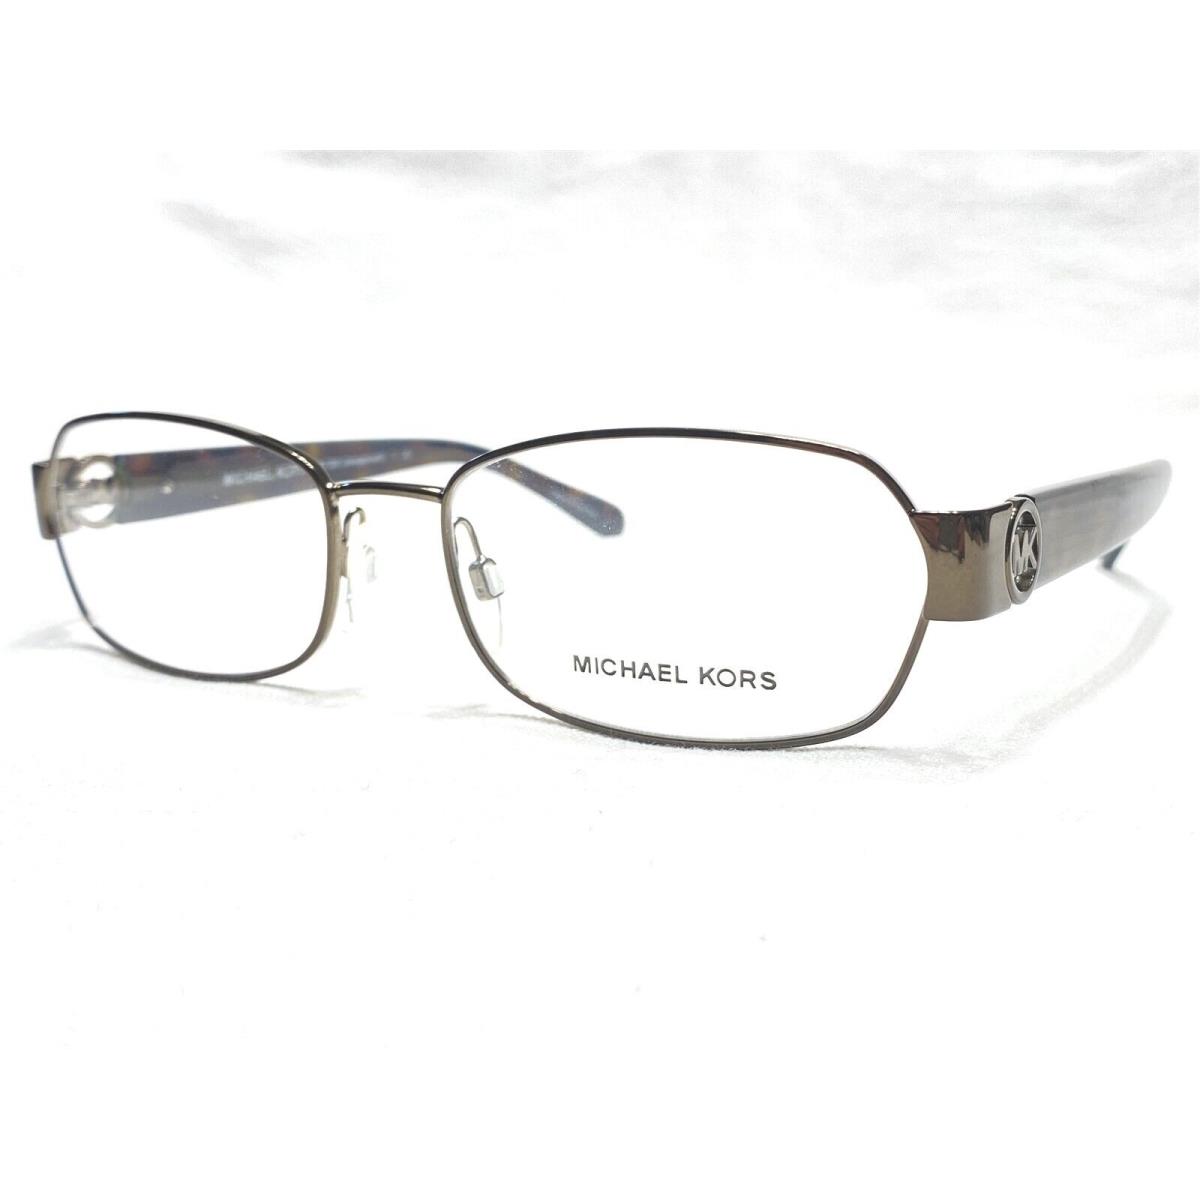 Michael Kors eyeglasses  - Brown & Tortoise , Brown & Tortoise Frame, 1023 Manufacturer 0